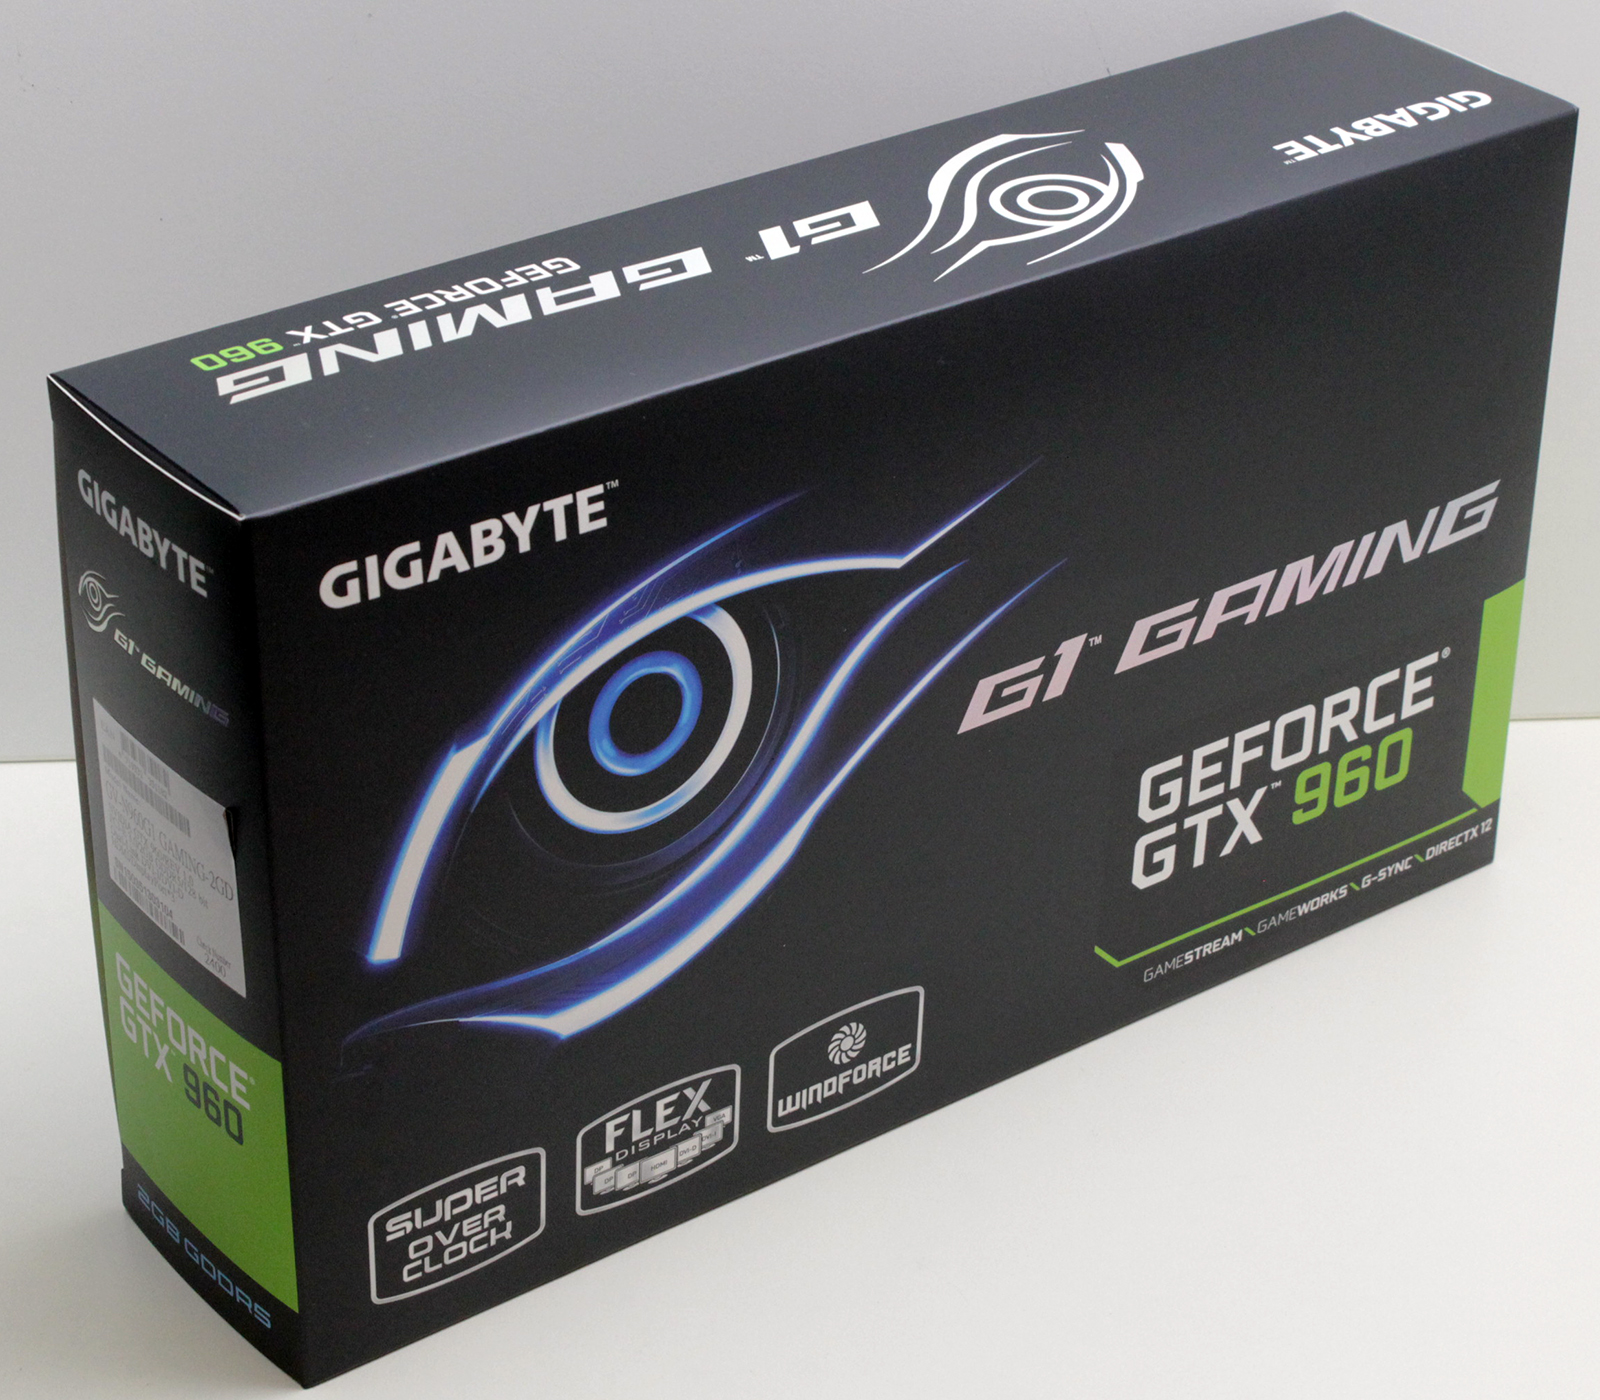 2 Gigabyte GTX 960 G1 Gaming box